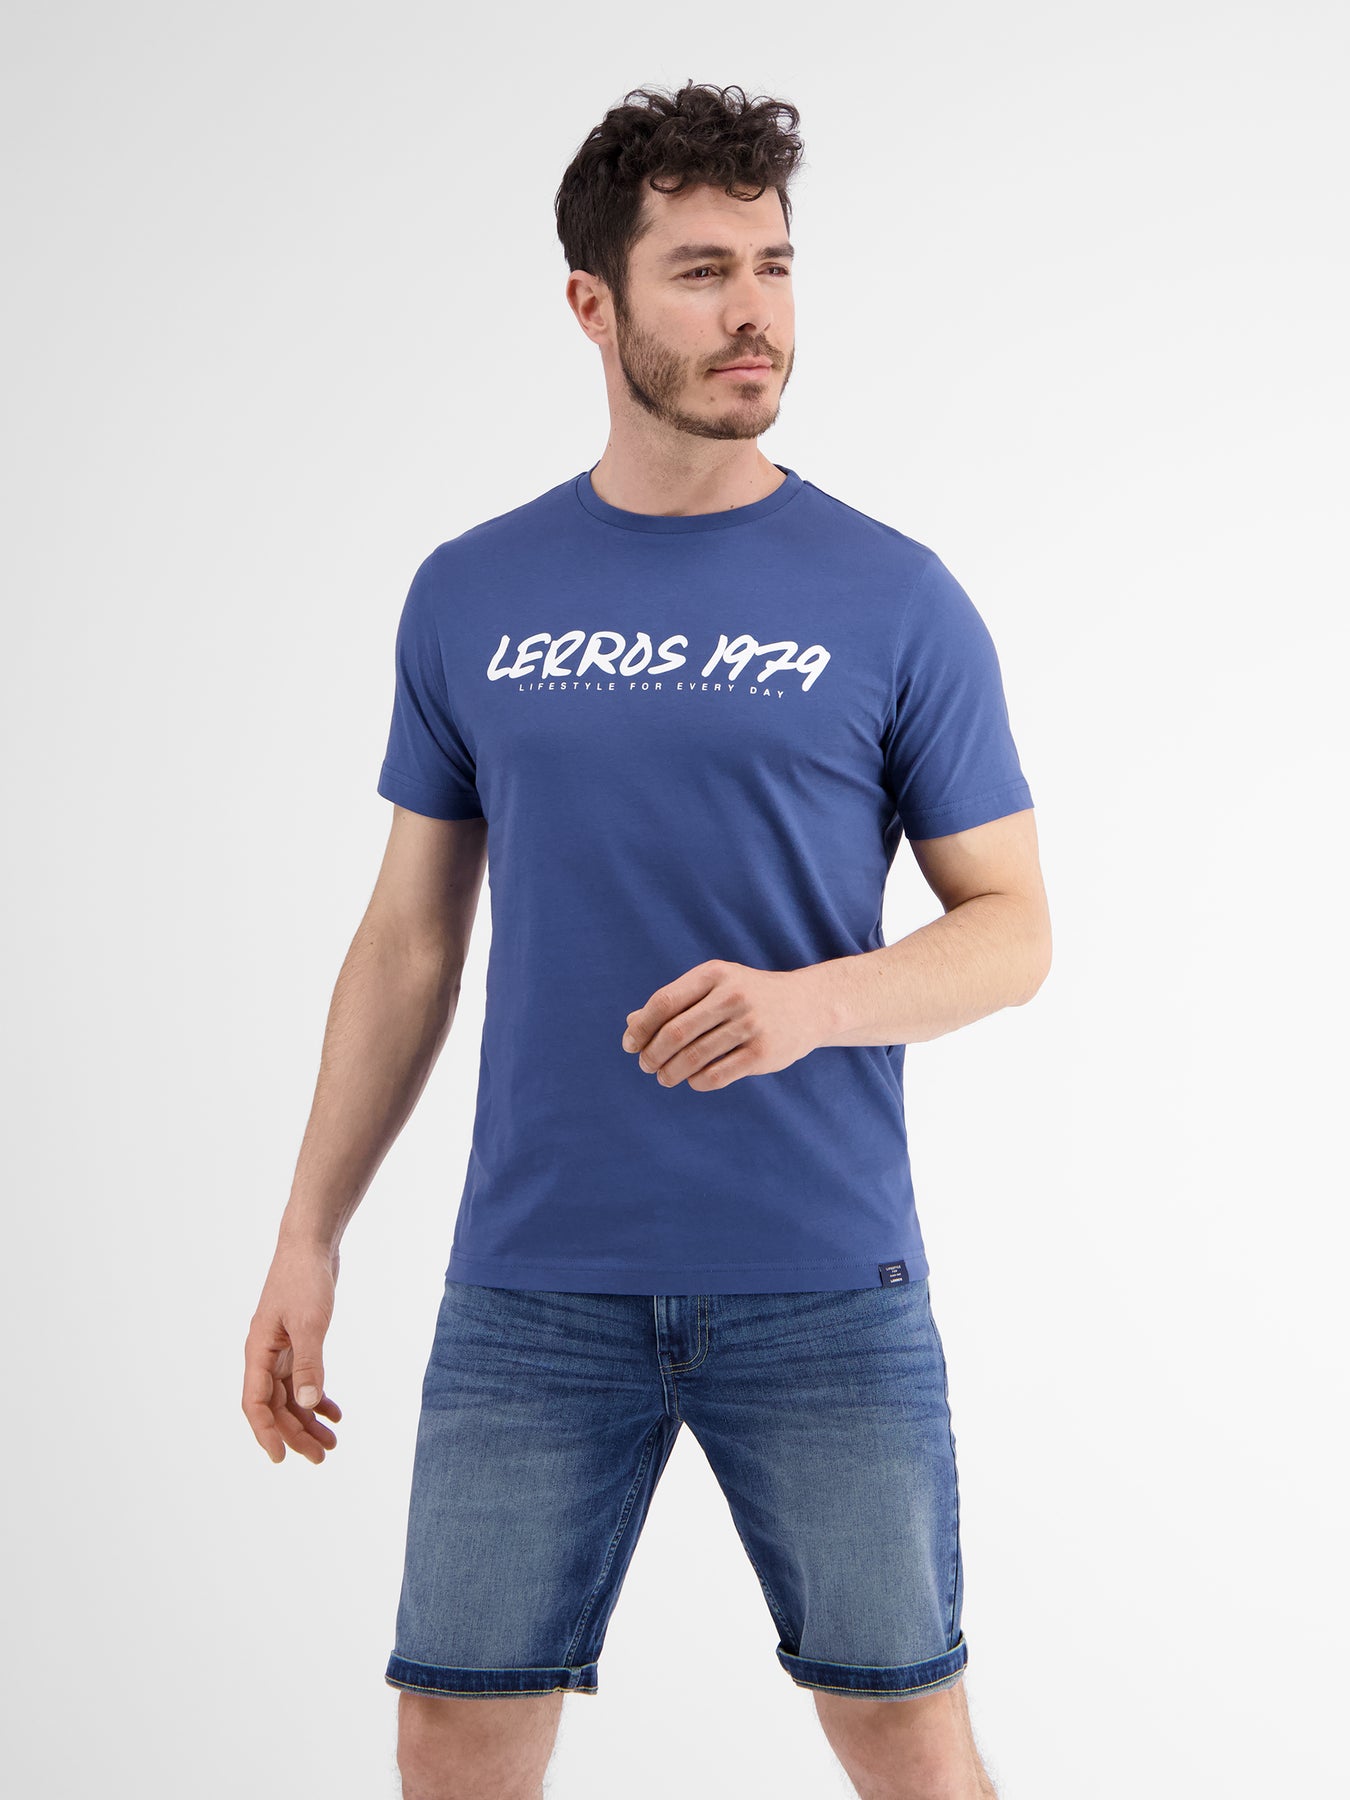 SHOP LERROS T-Shirt – 1979* *LERROS